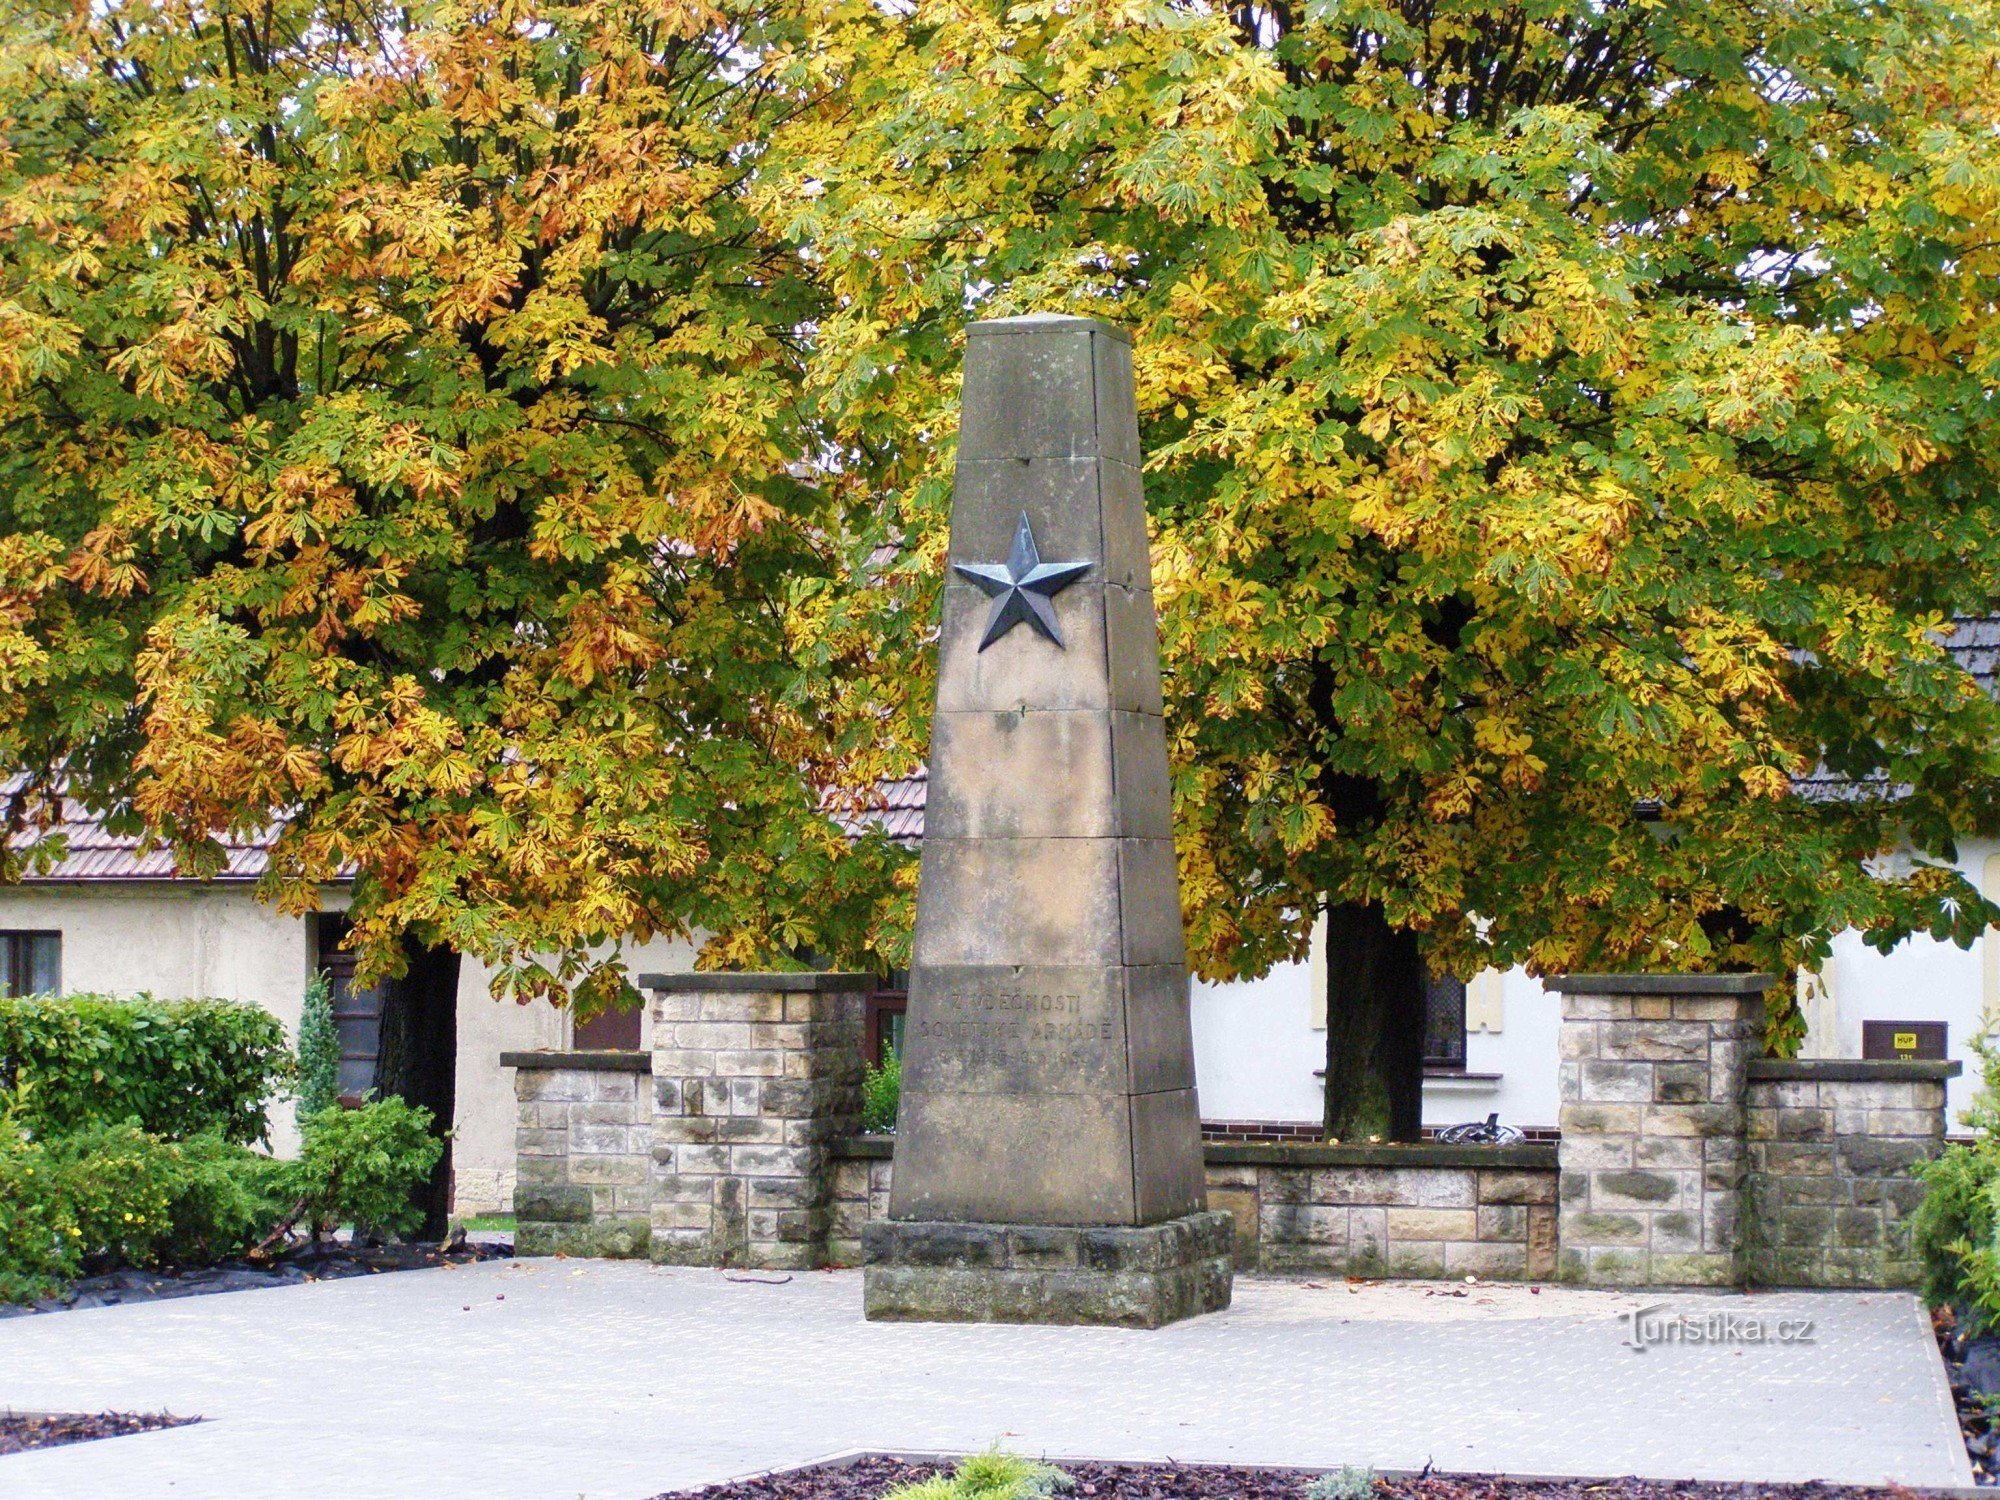 Vysoké Veselí - muistomerkki Neuvostoliiton vapauttajille